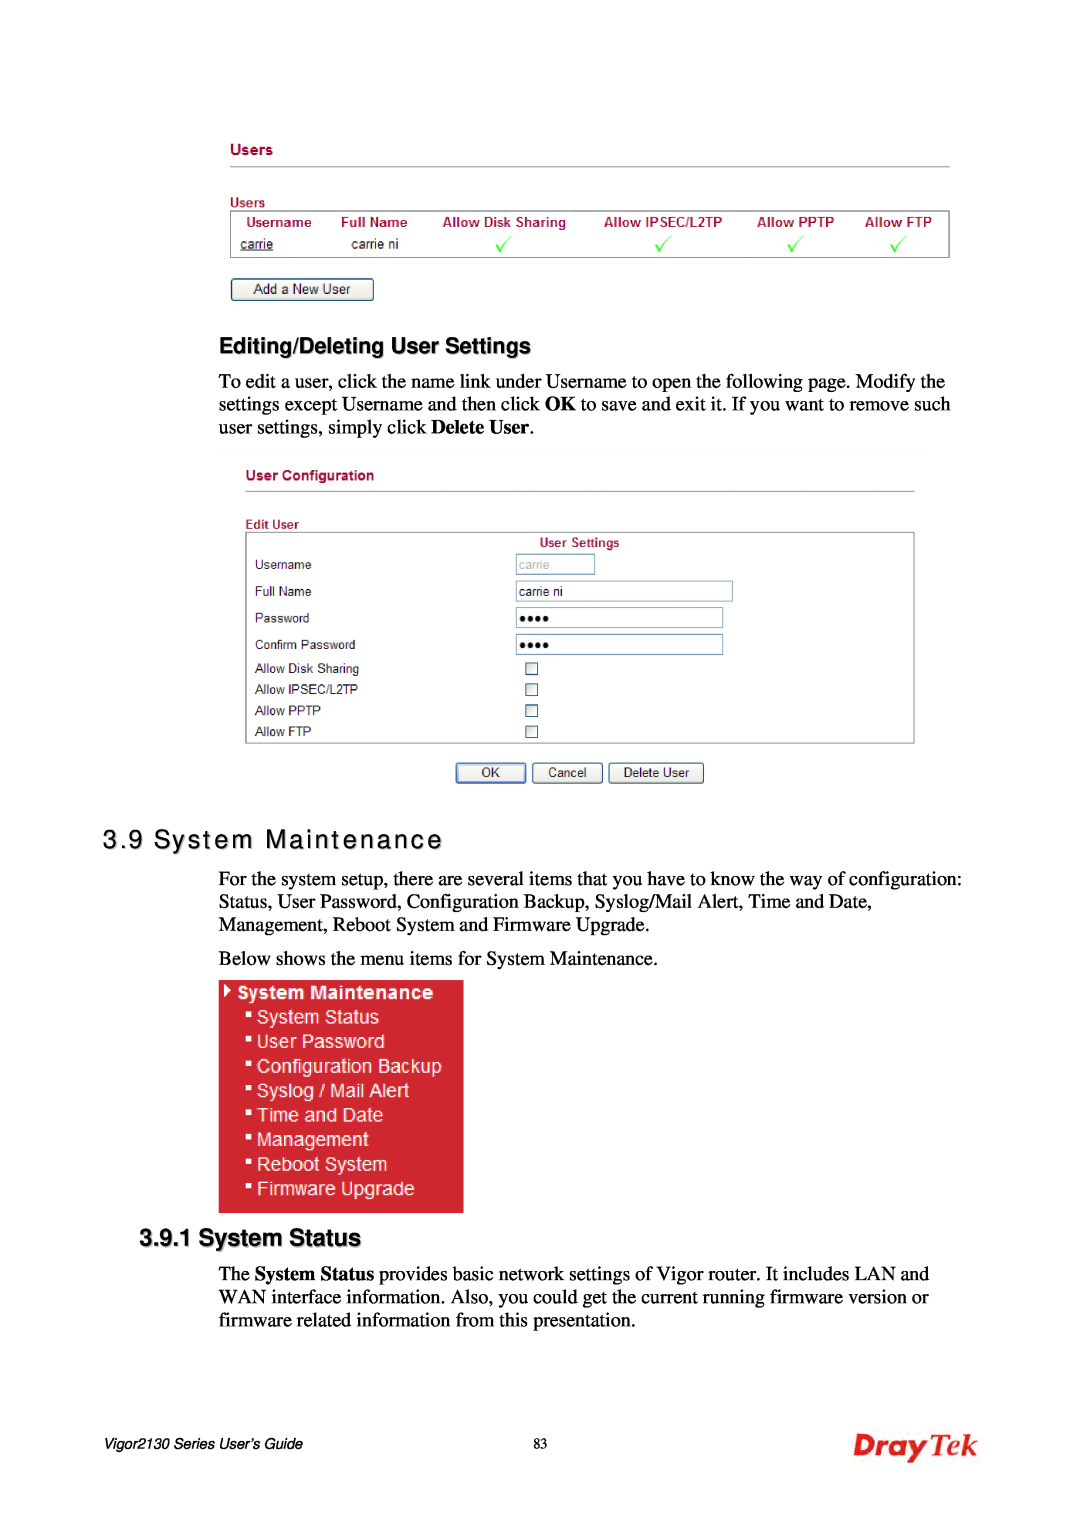 Draytek 2130 manual System Maintenance, System Status, Editing/Deleting User Settings 